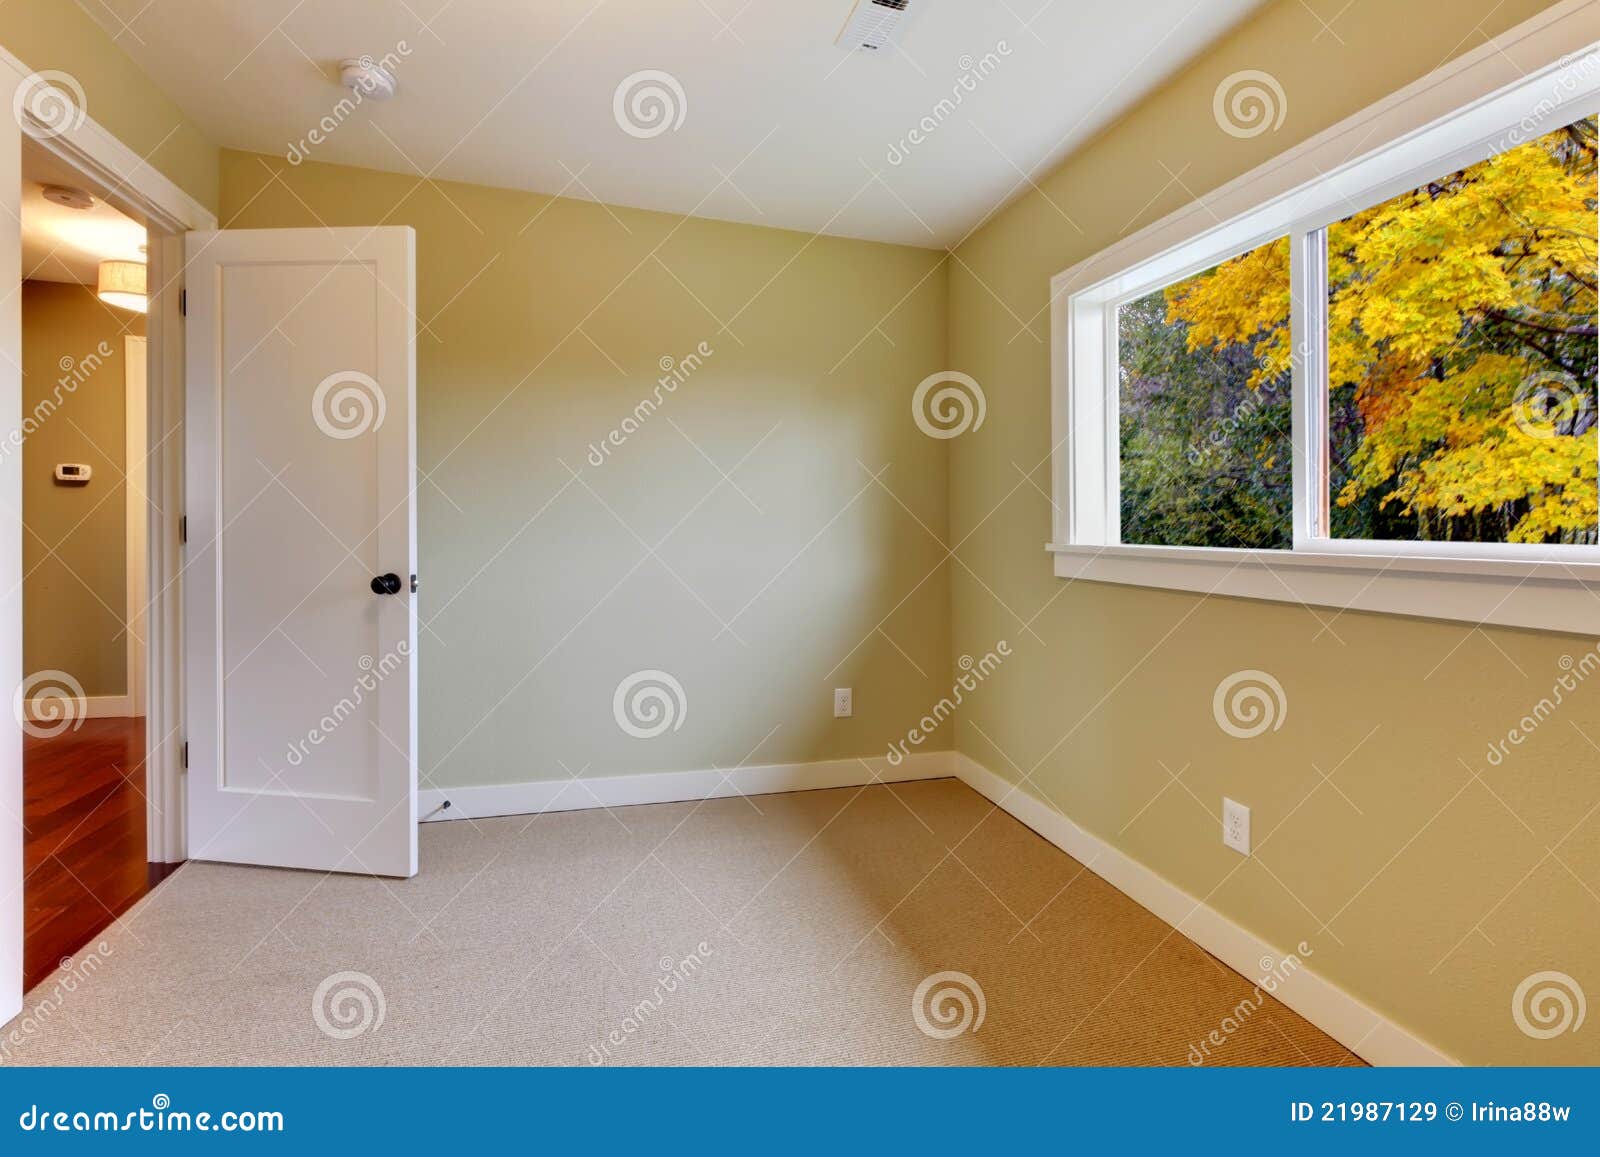 i wandered too deep.  Empty room, Yellow carpet, Home decor